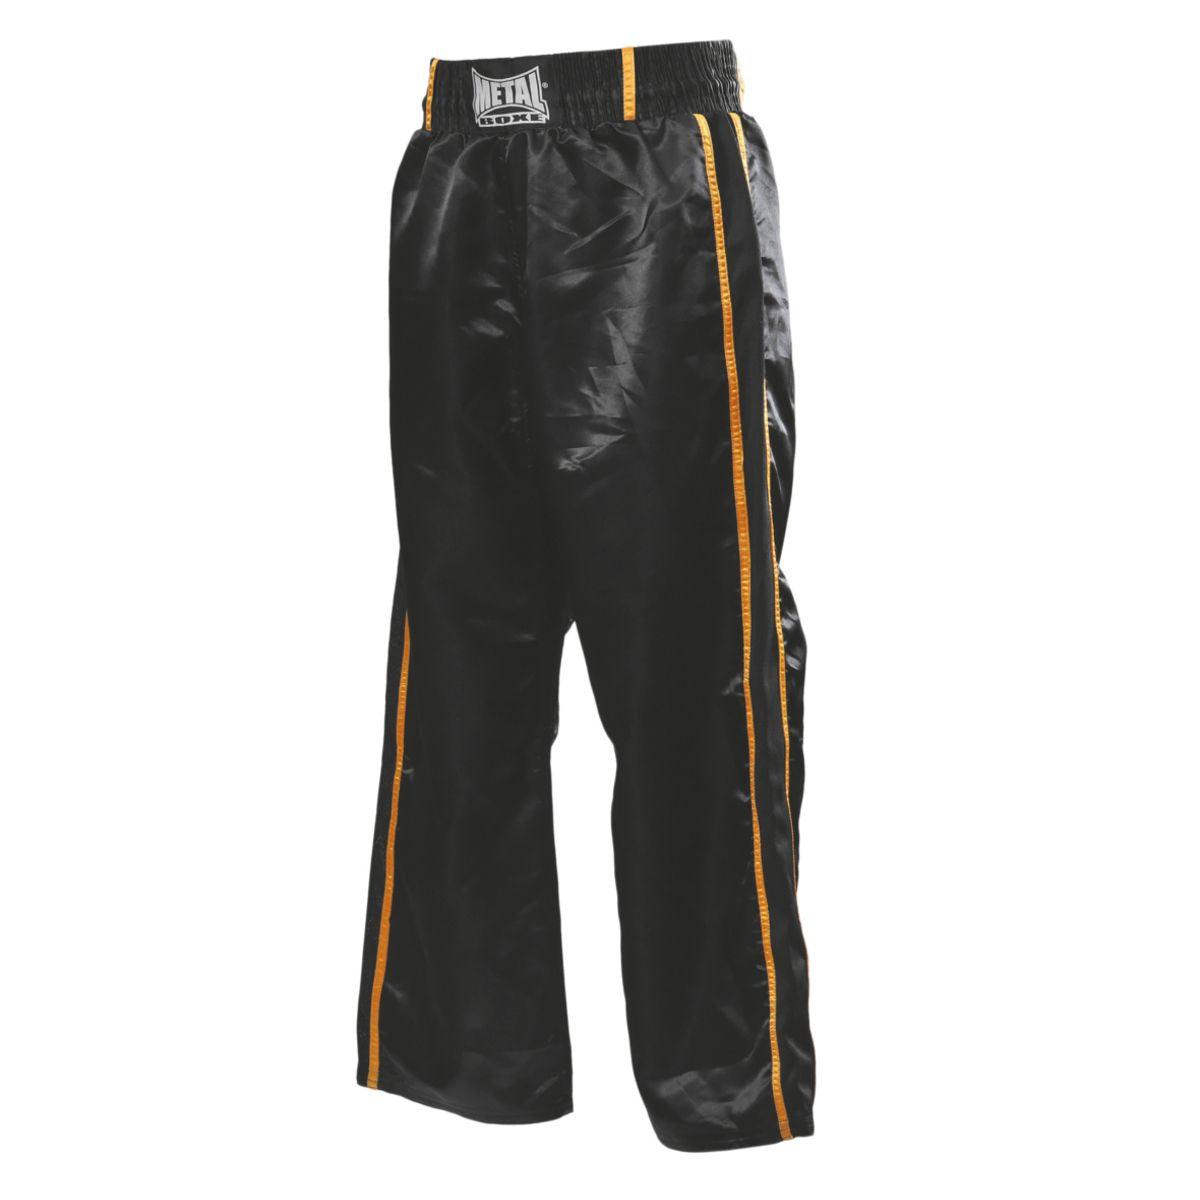 Pantalon de Full Contact Metal Boxe noir MB55